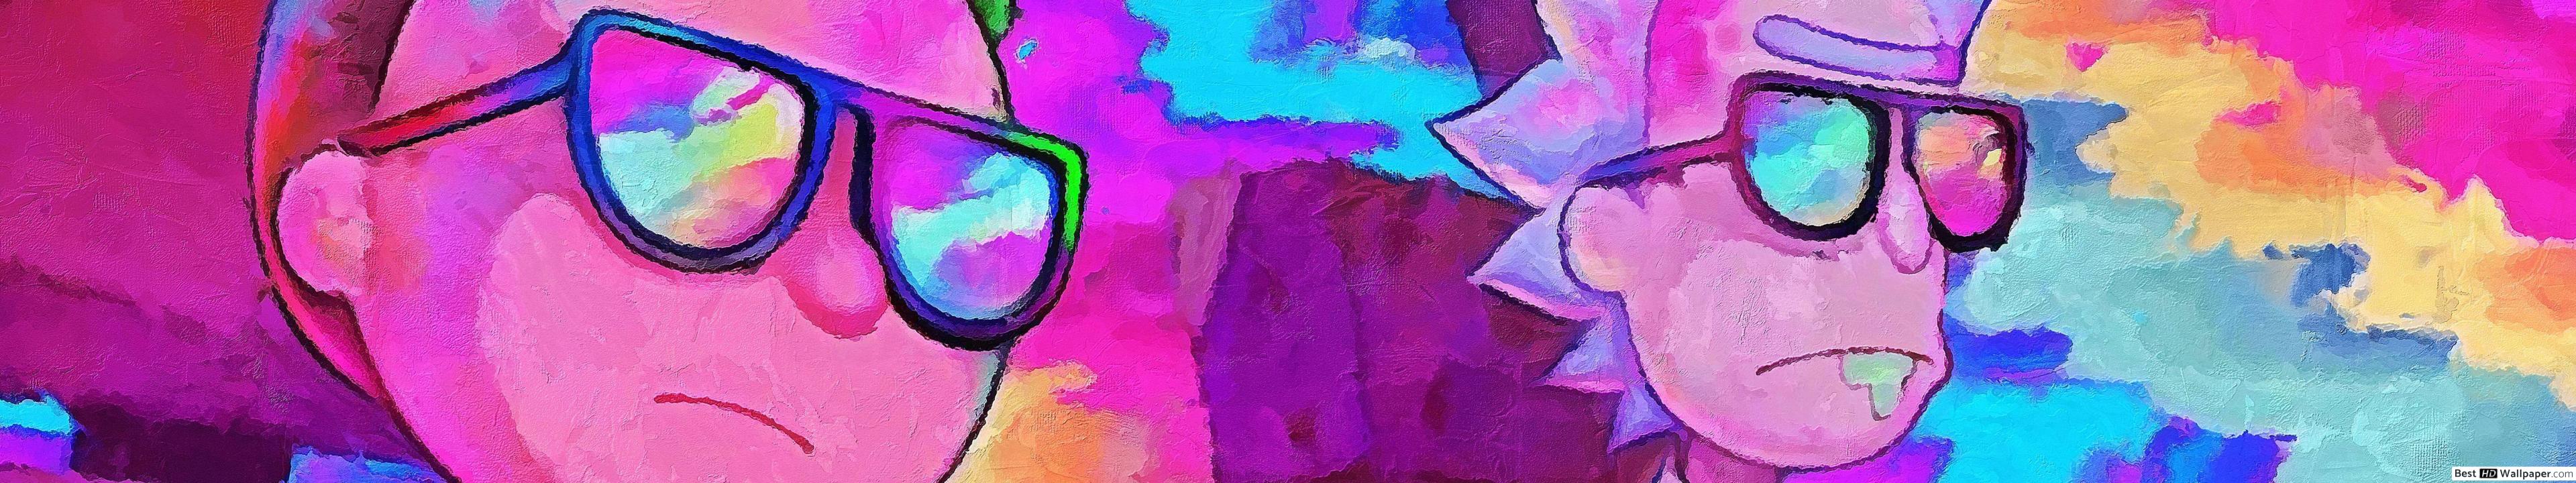 rick and morty壁紙,紫の,バイオレット,ペインティング,現代美術,アート